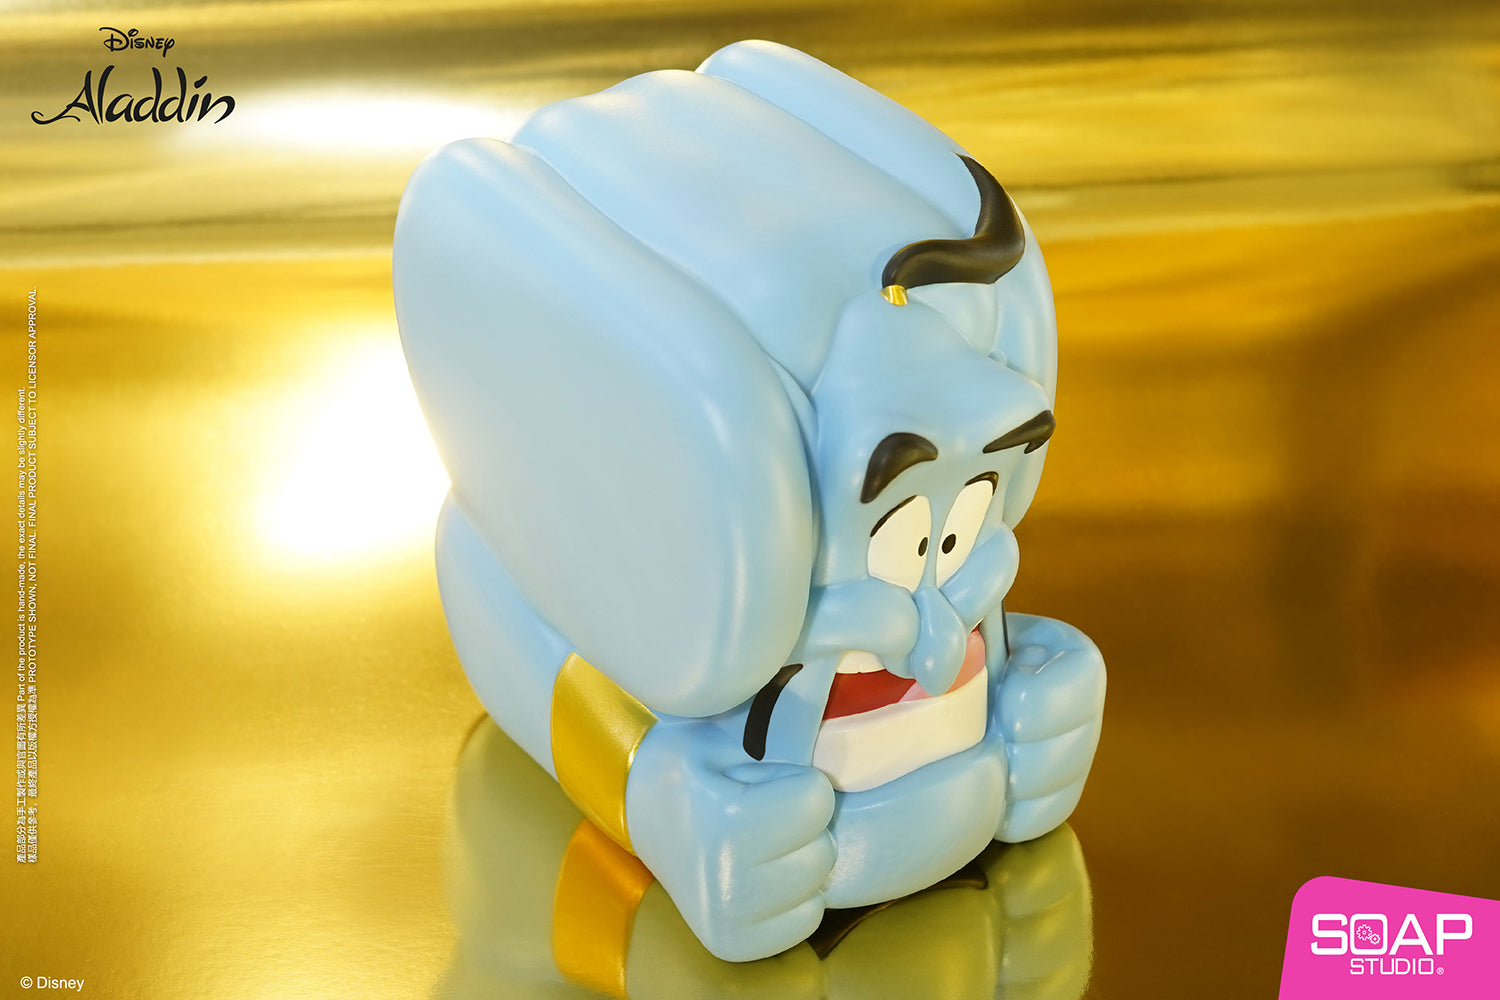 Soap Studio DY022 Aladdin Series - Genie Block Figure